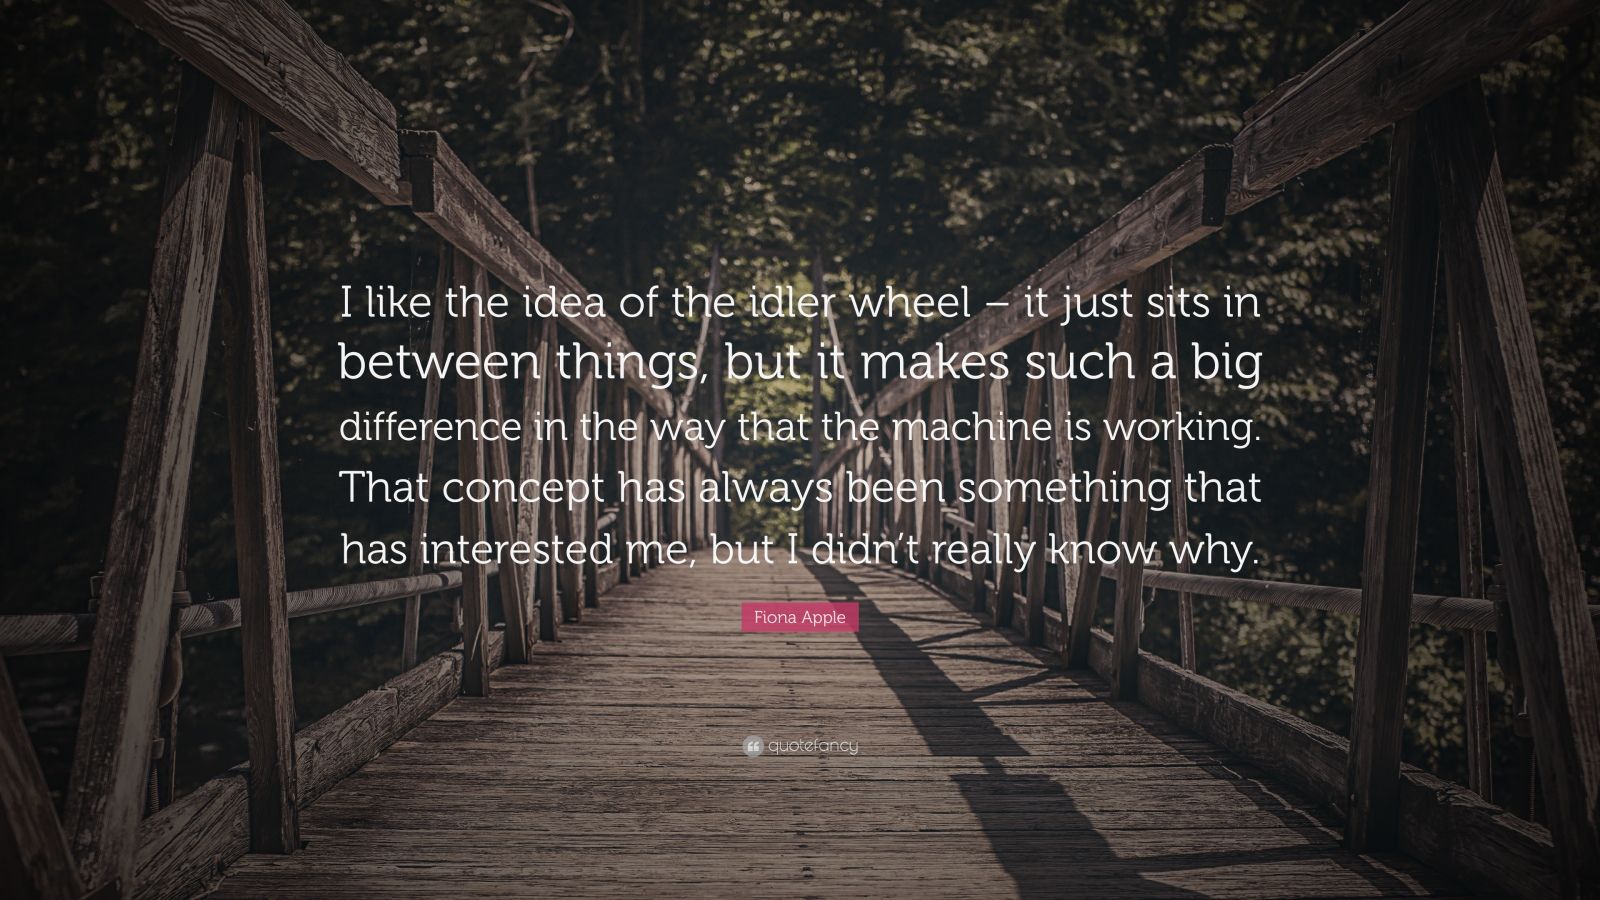 Fiona Apple Quote: "I like the idea of the idler wheel ...